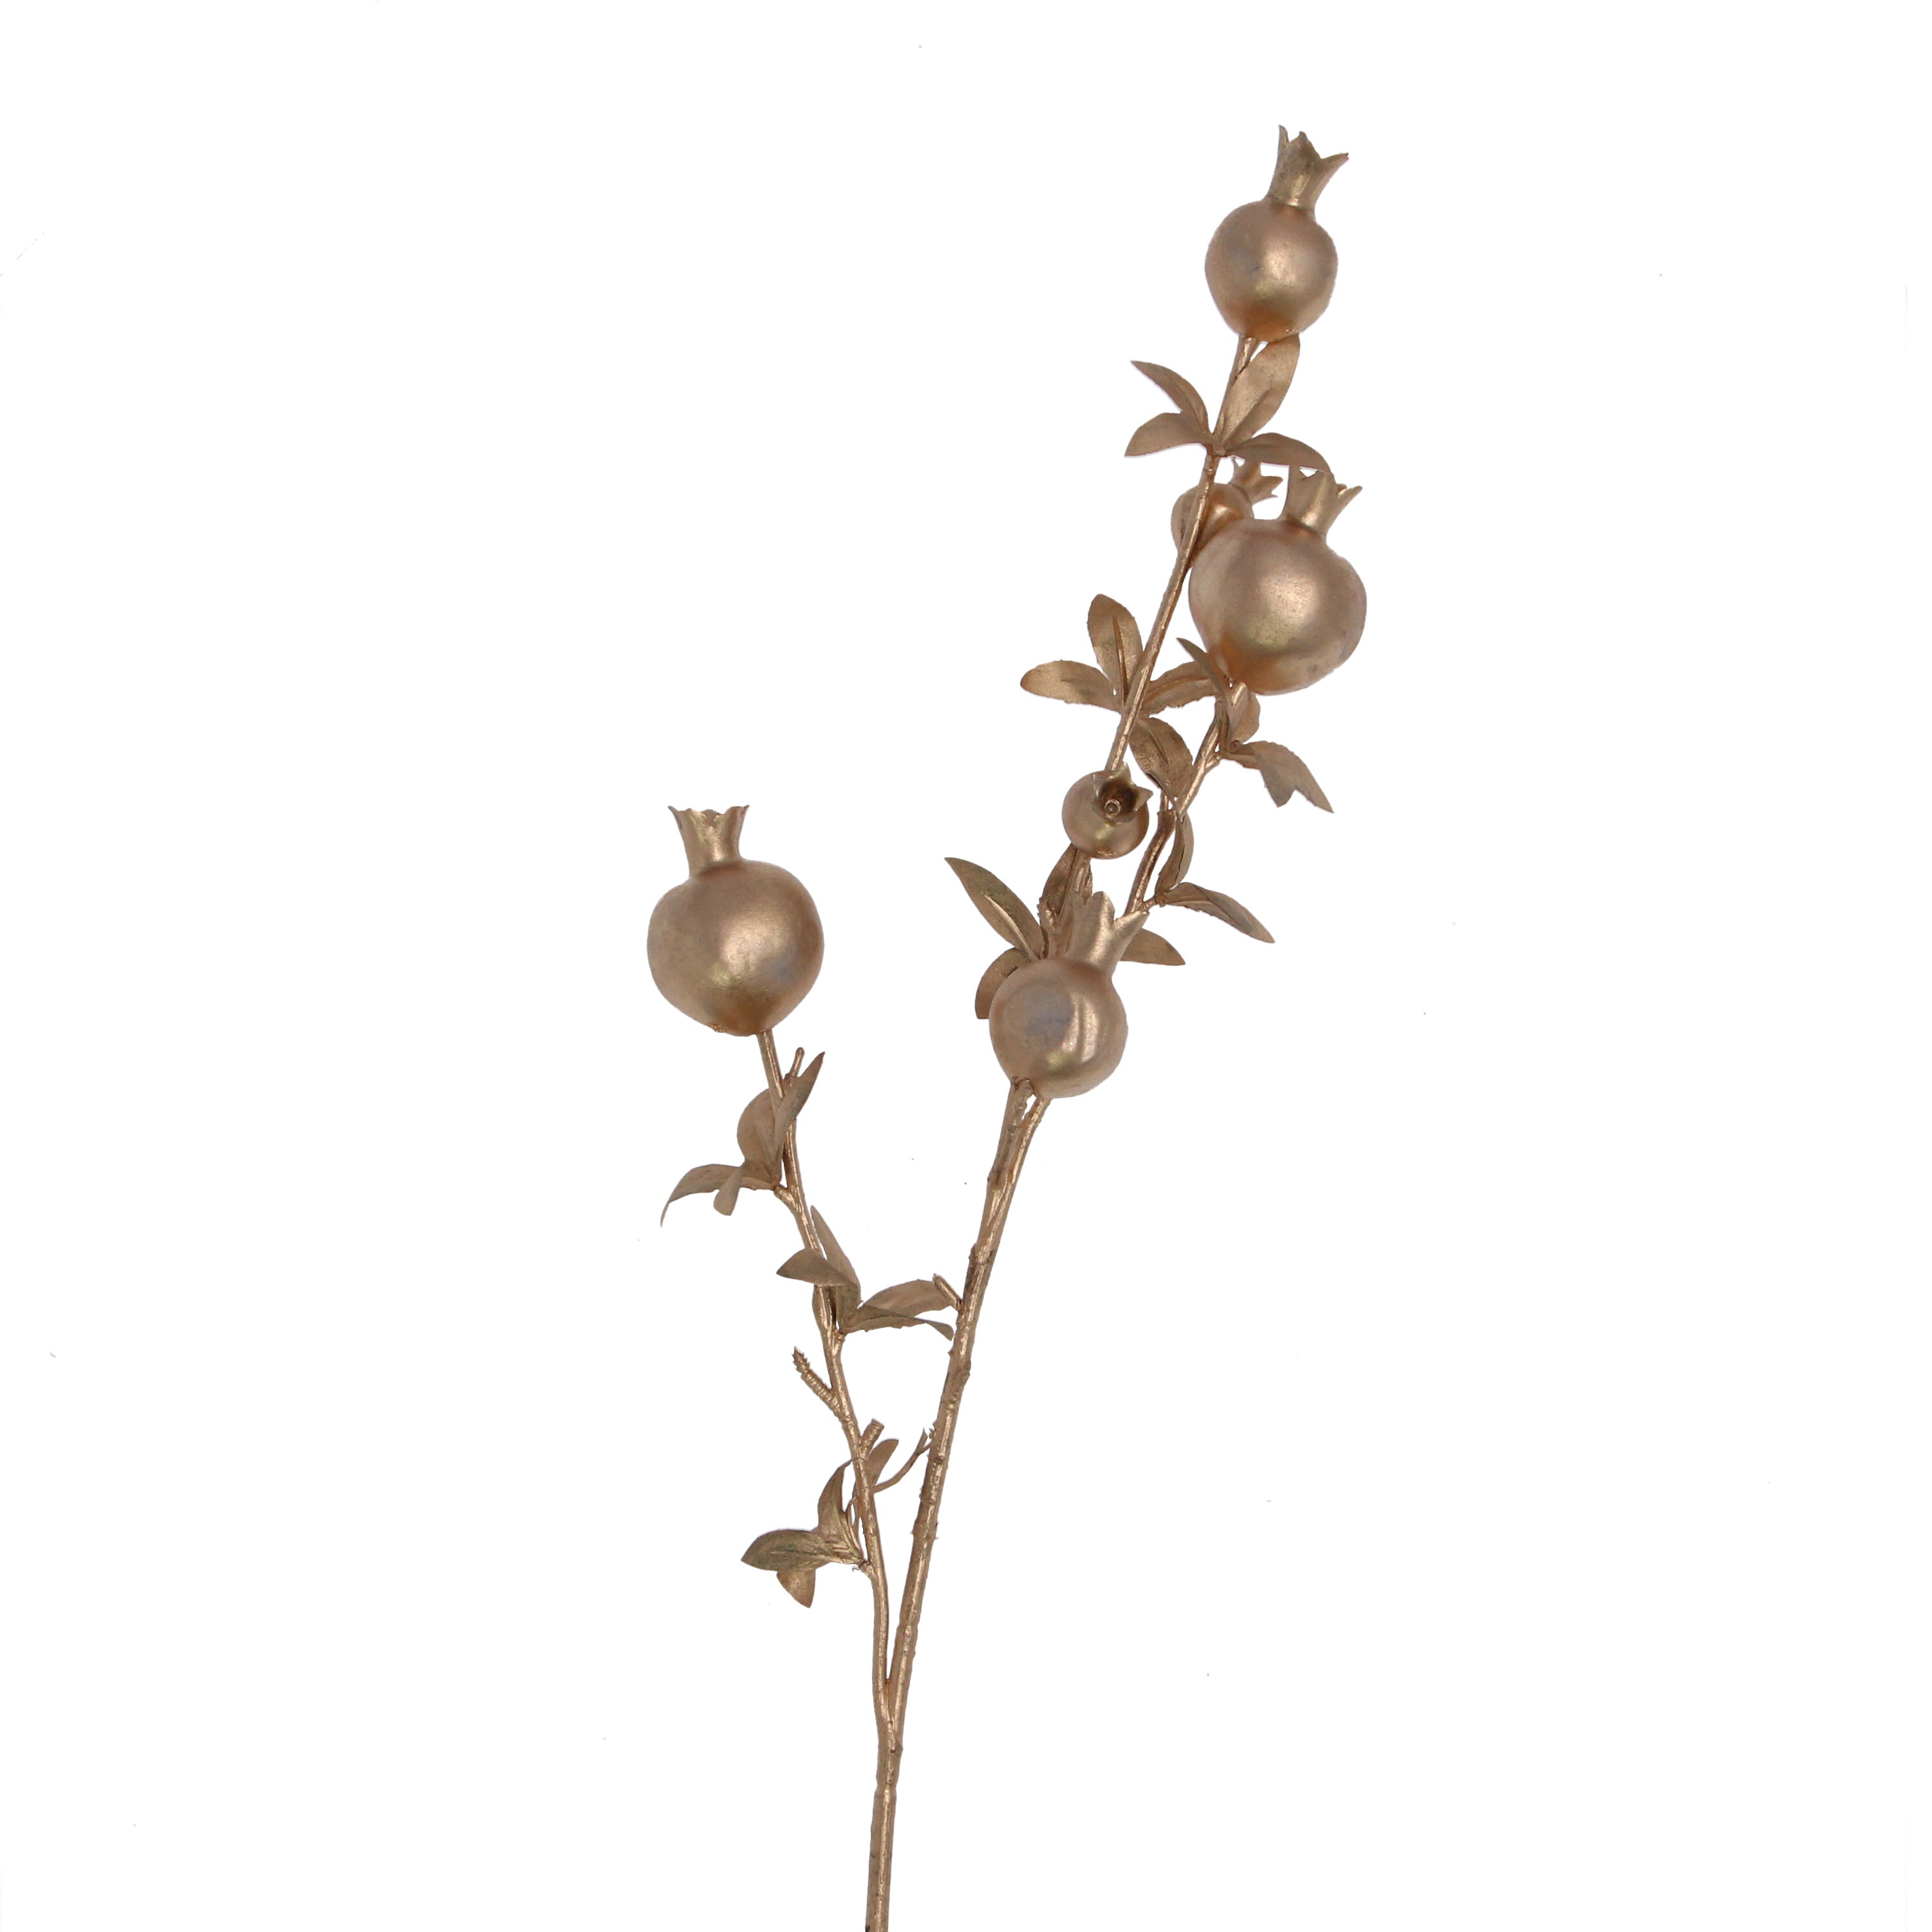 Gold pomegranate stem